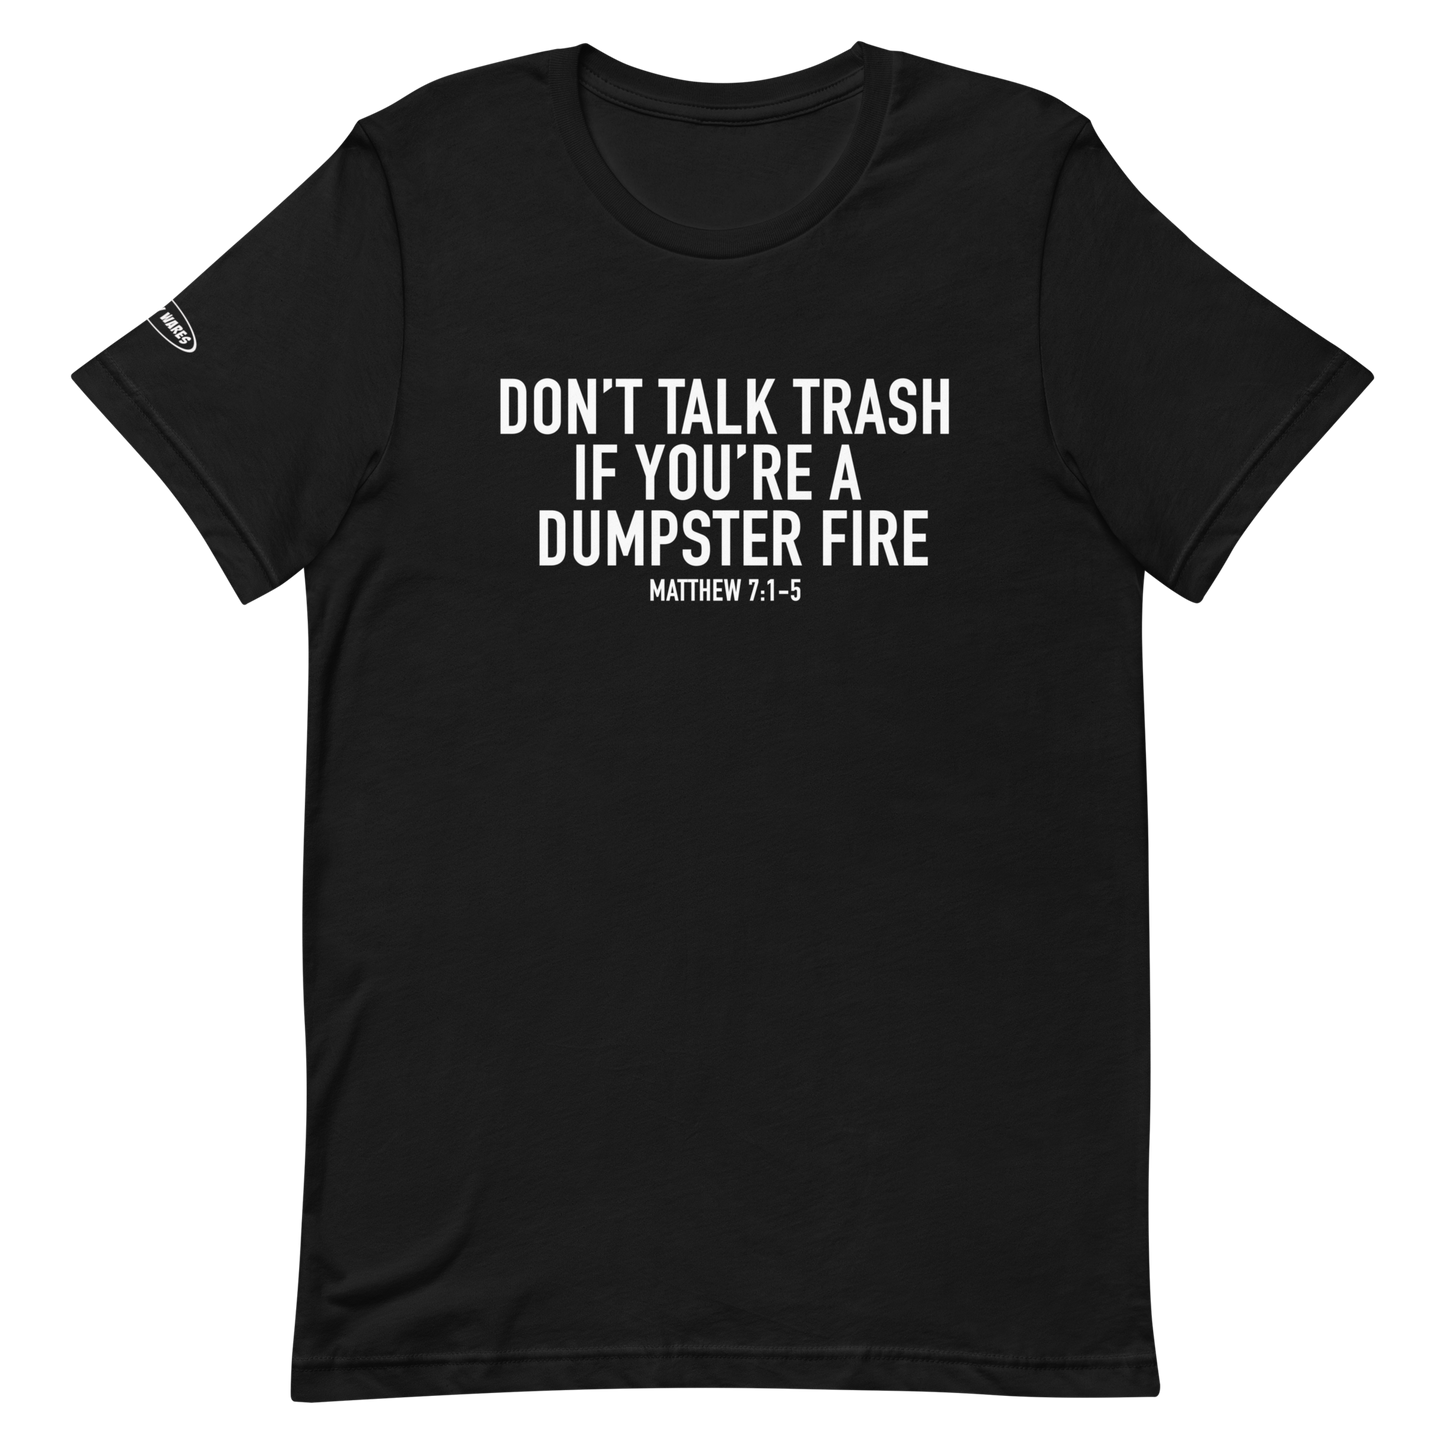 CHRISTIAN - Don't Talk Trash if You're a Dumpster Fire - Matthew 7:1-5